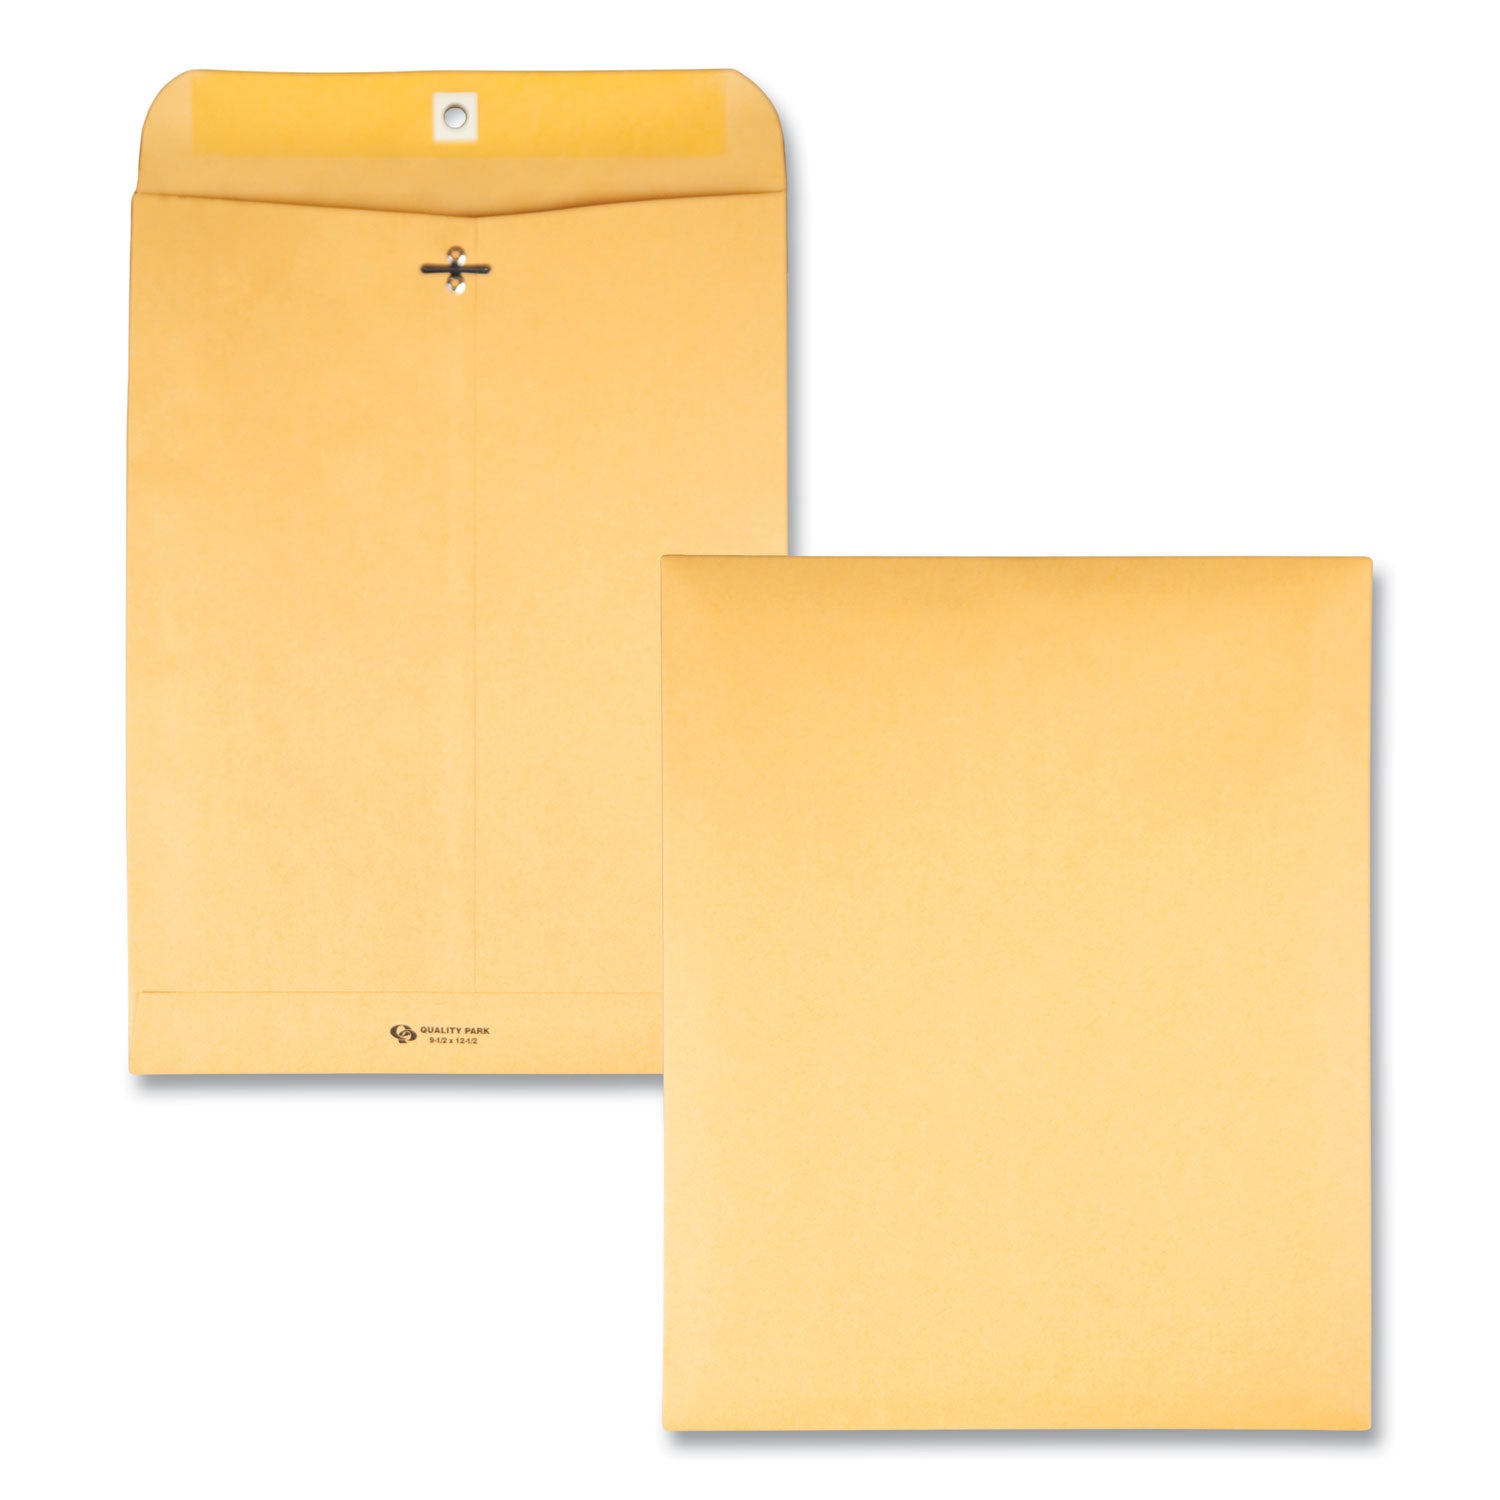 Clasp Envelope, 32 lb Bond Weight Kraft, #12 1/2, Square Flap, Clasp/Gummed Closure, 9.5 x 12.5, Brown Kraft, 100/Box - 